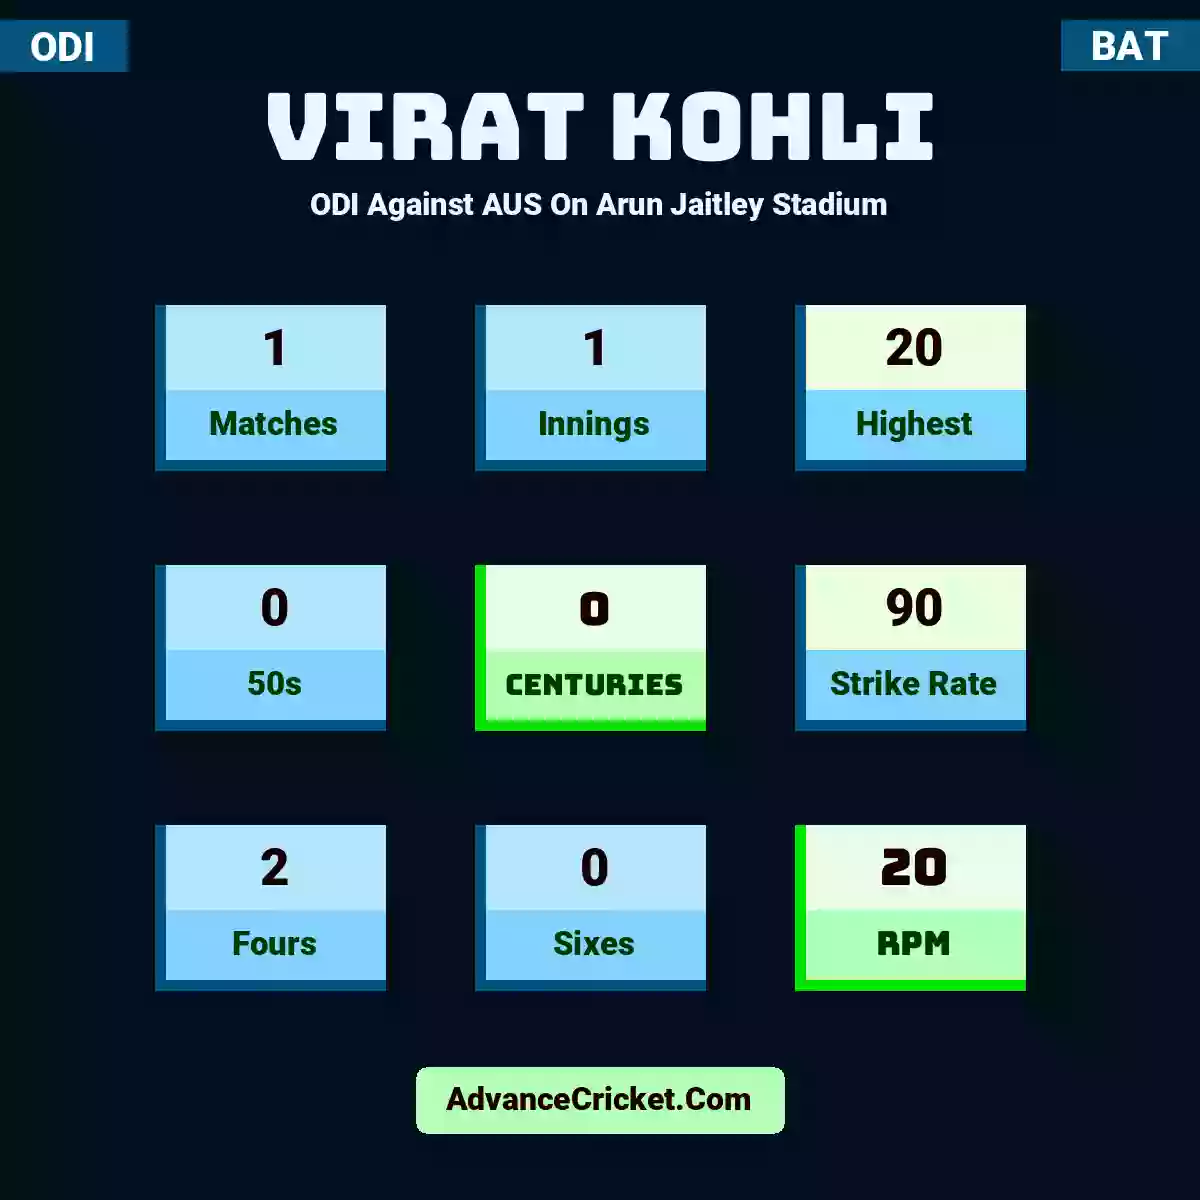 Virat Kohli ODI  Against AUS On Arun Jaitley Stadium, Virat Kohli played 1 matches, scored 20 runs as highest, 0 half-centuries, and 0 centuries, with a strike rate of 90. V.Kohli hit 2 fours and 0 sixes, with an RPM of 20.